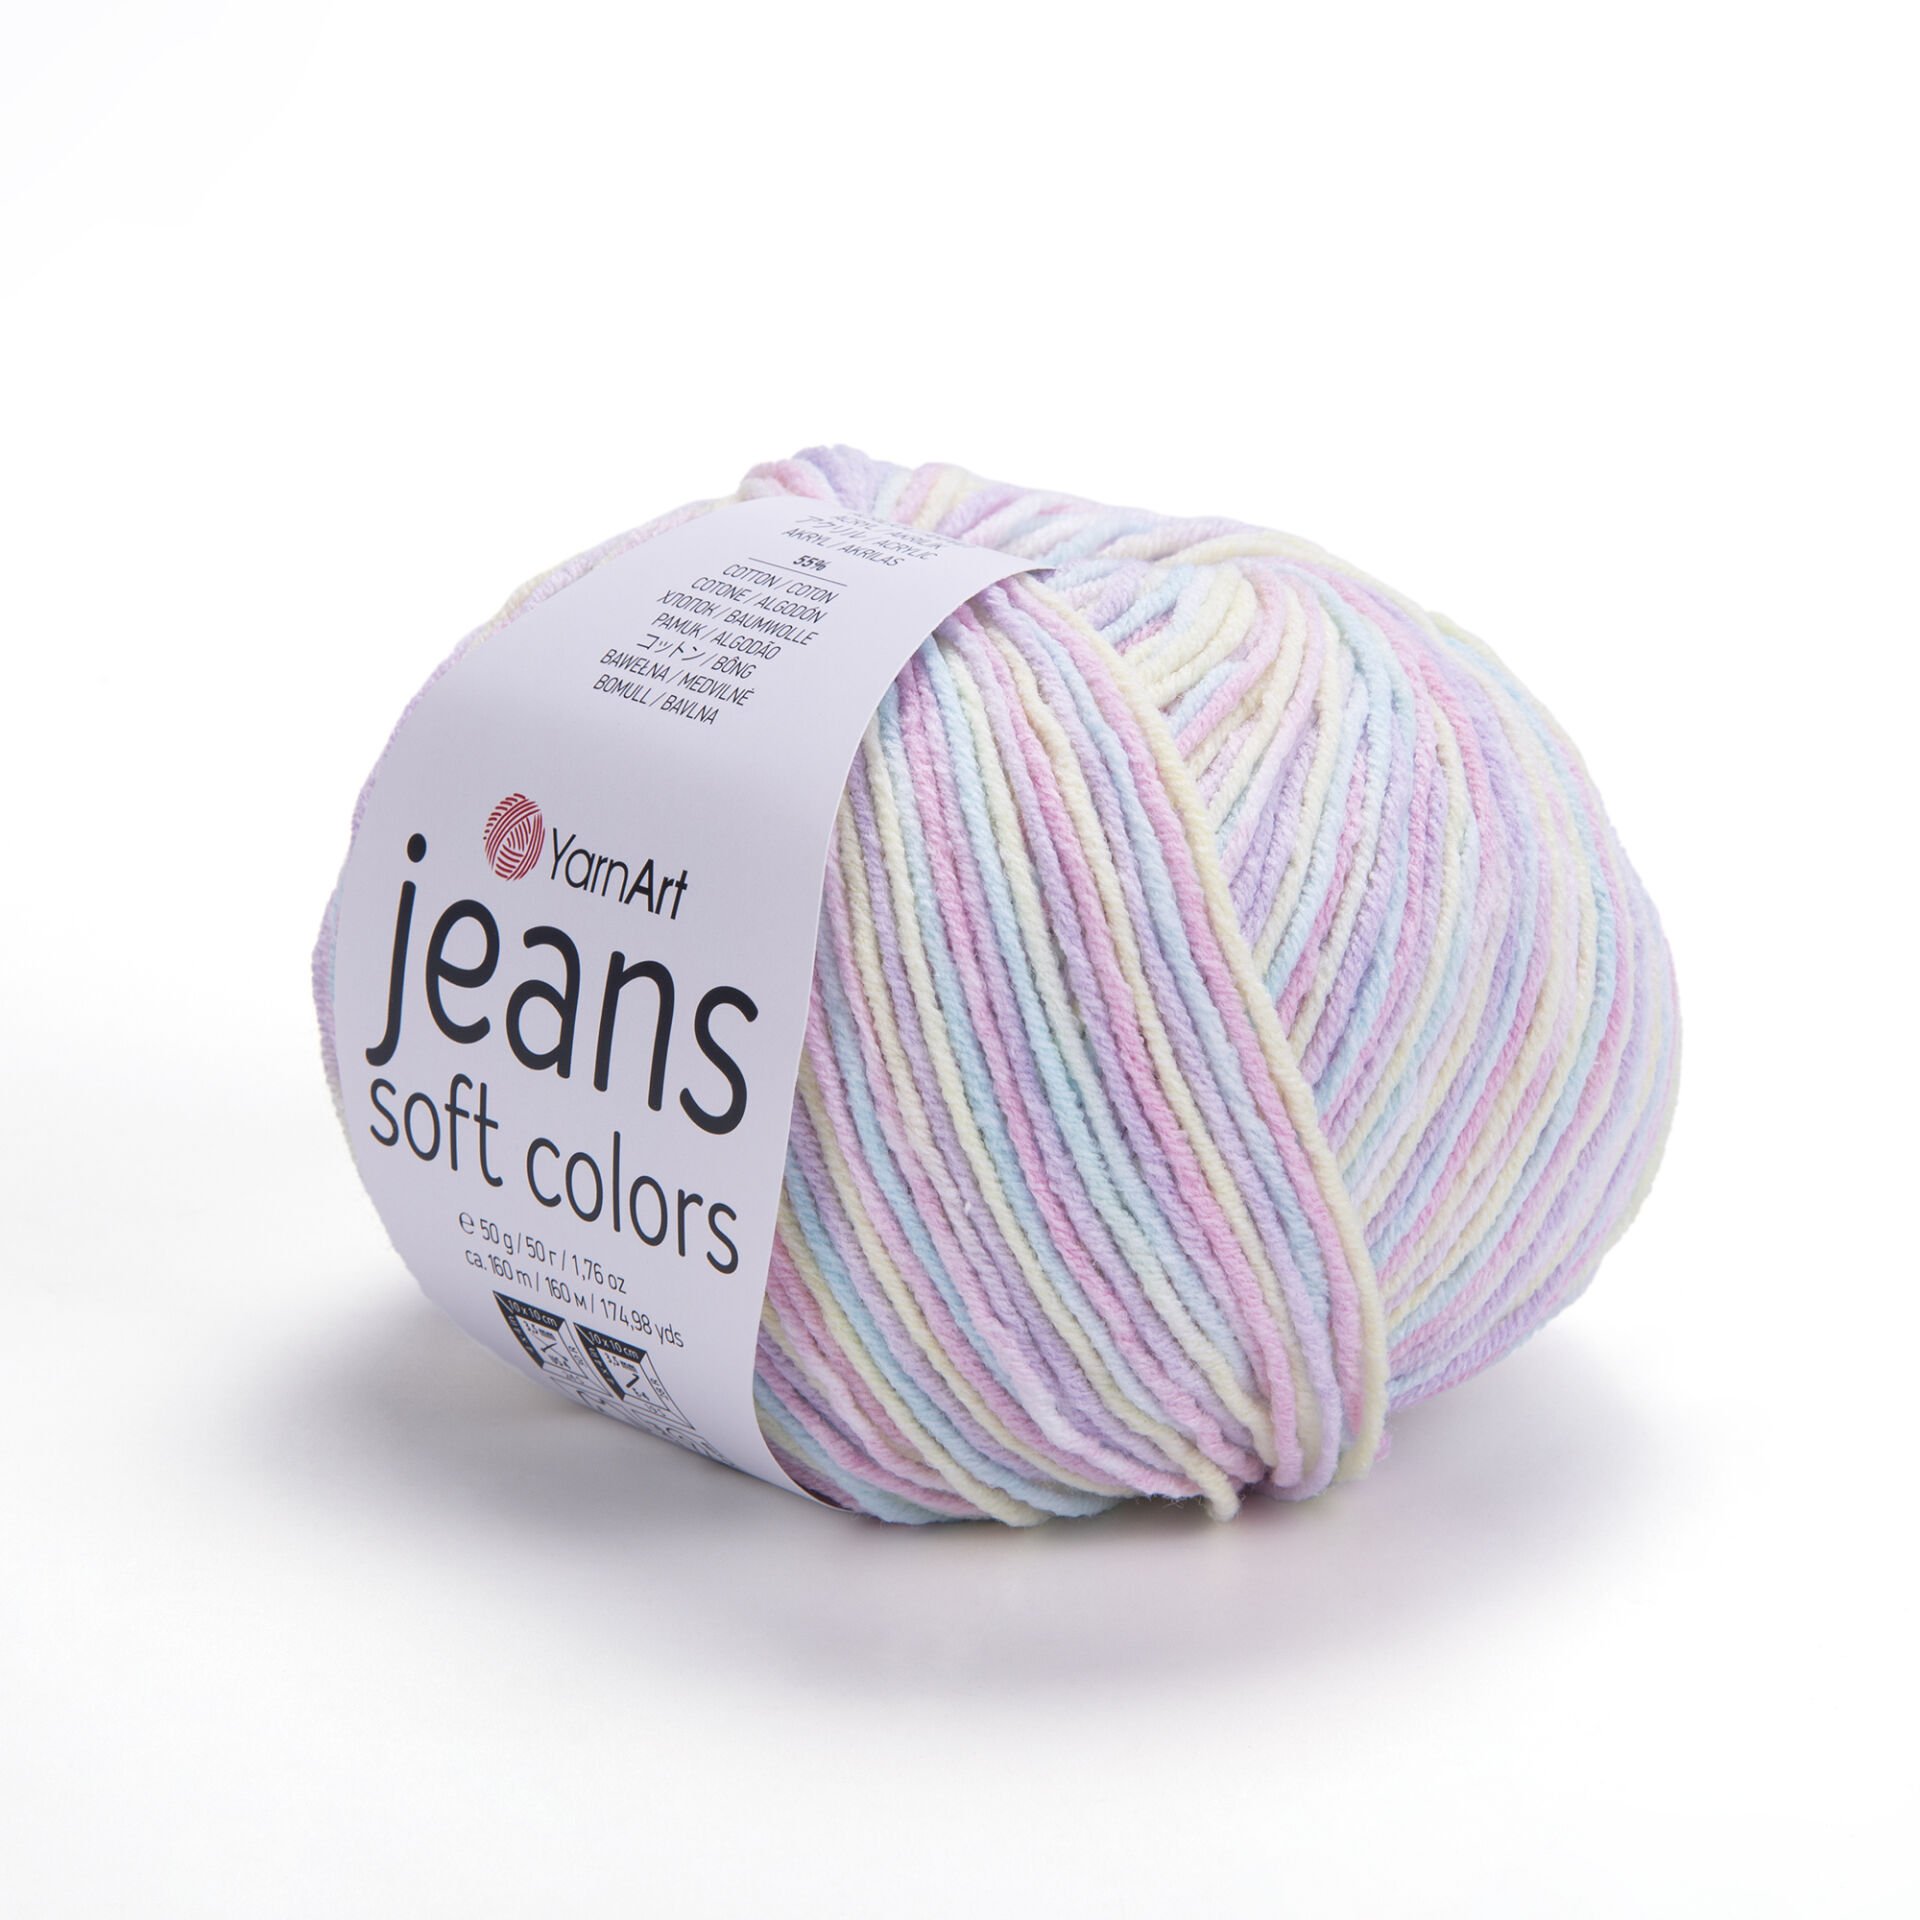 Yarn Art Jeans Yarn, Yarn Art Jeans, Yarnart Jeans , Soft